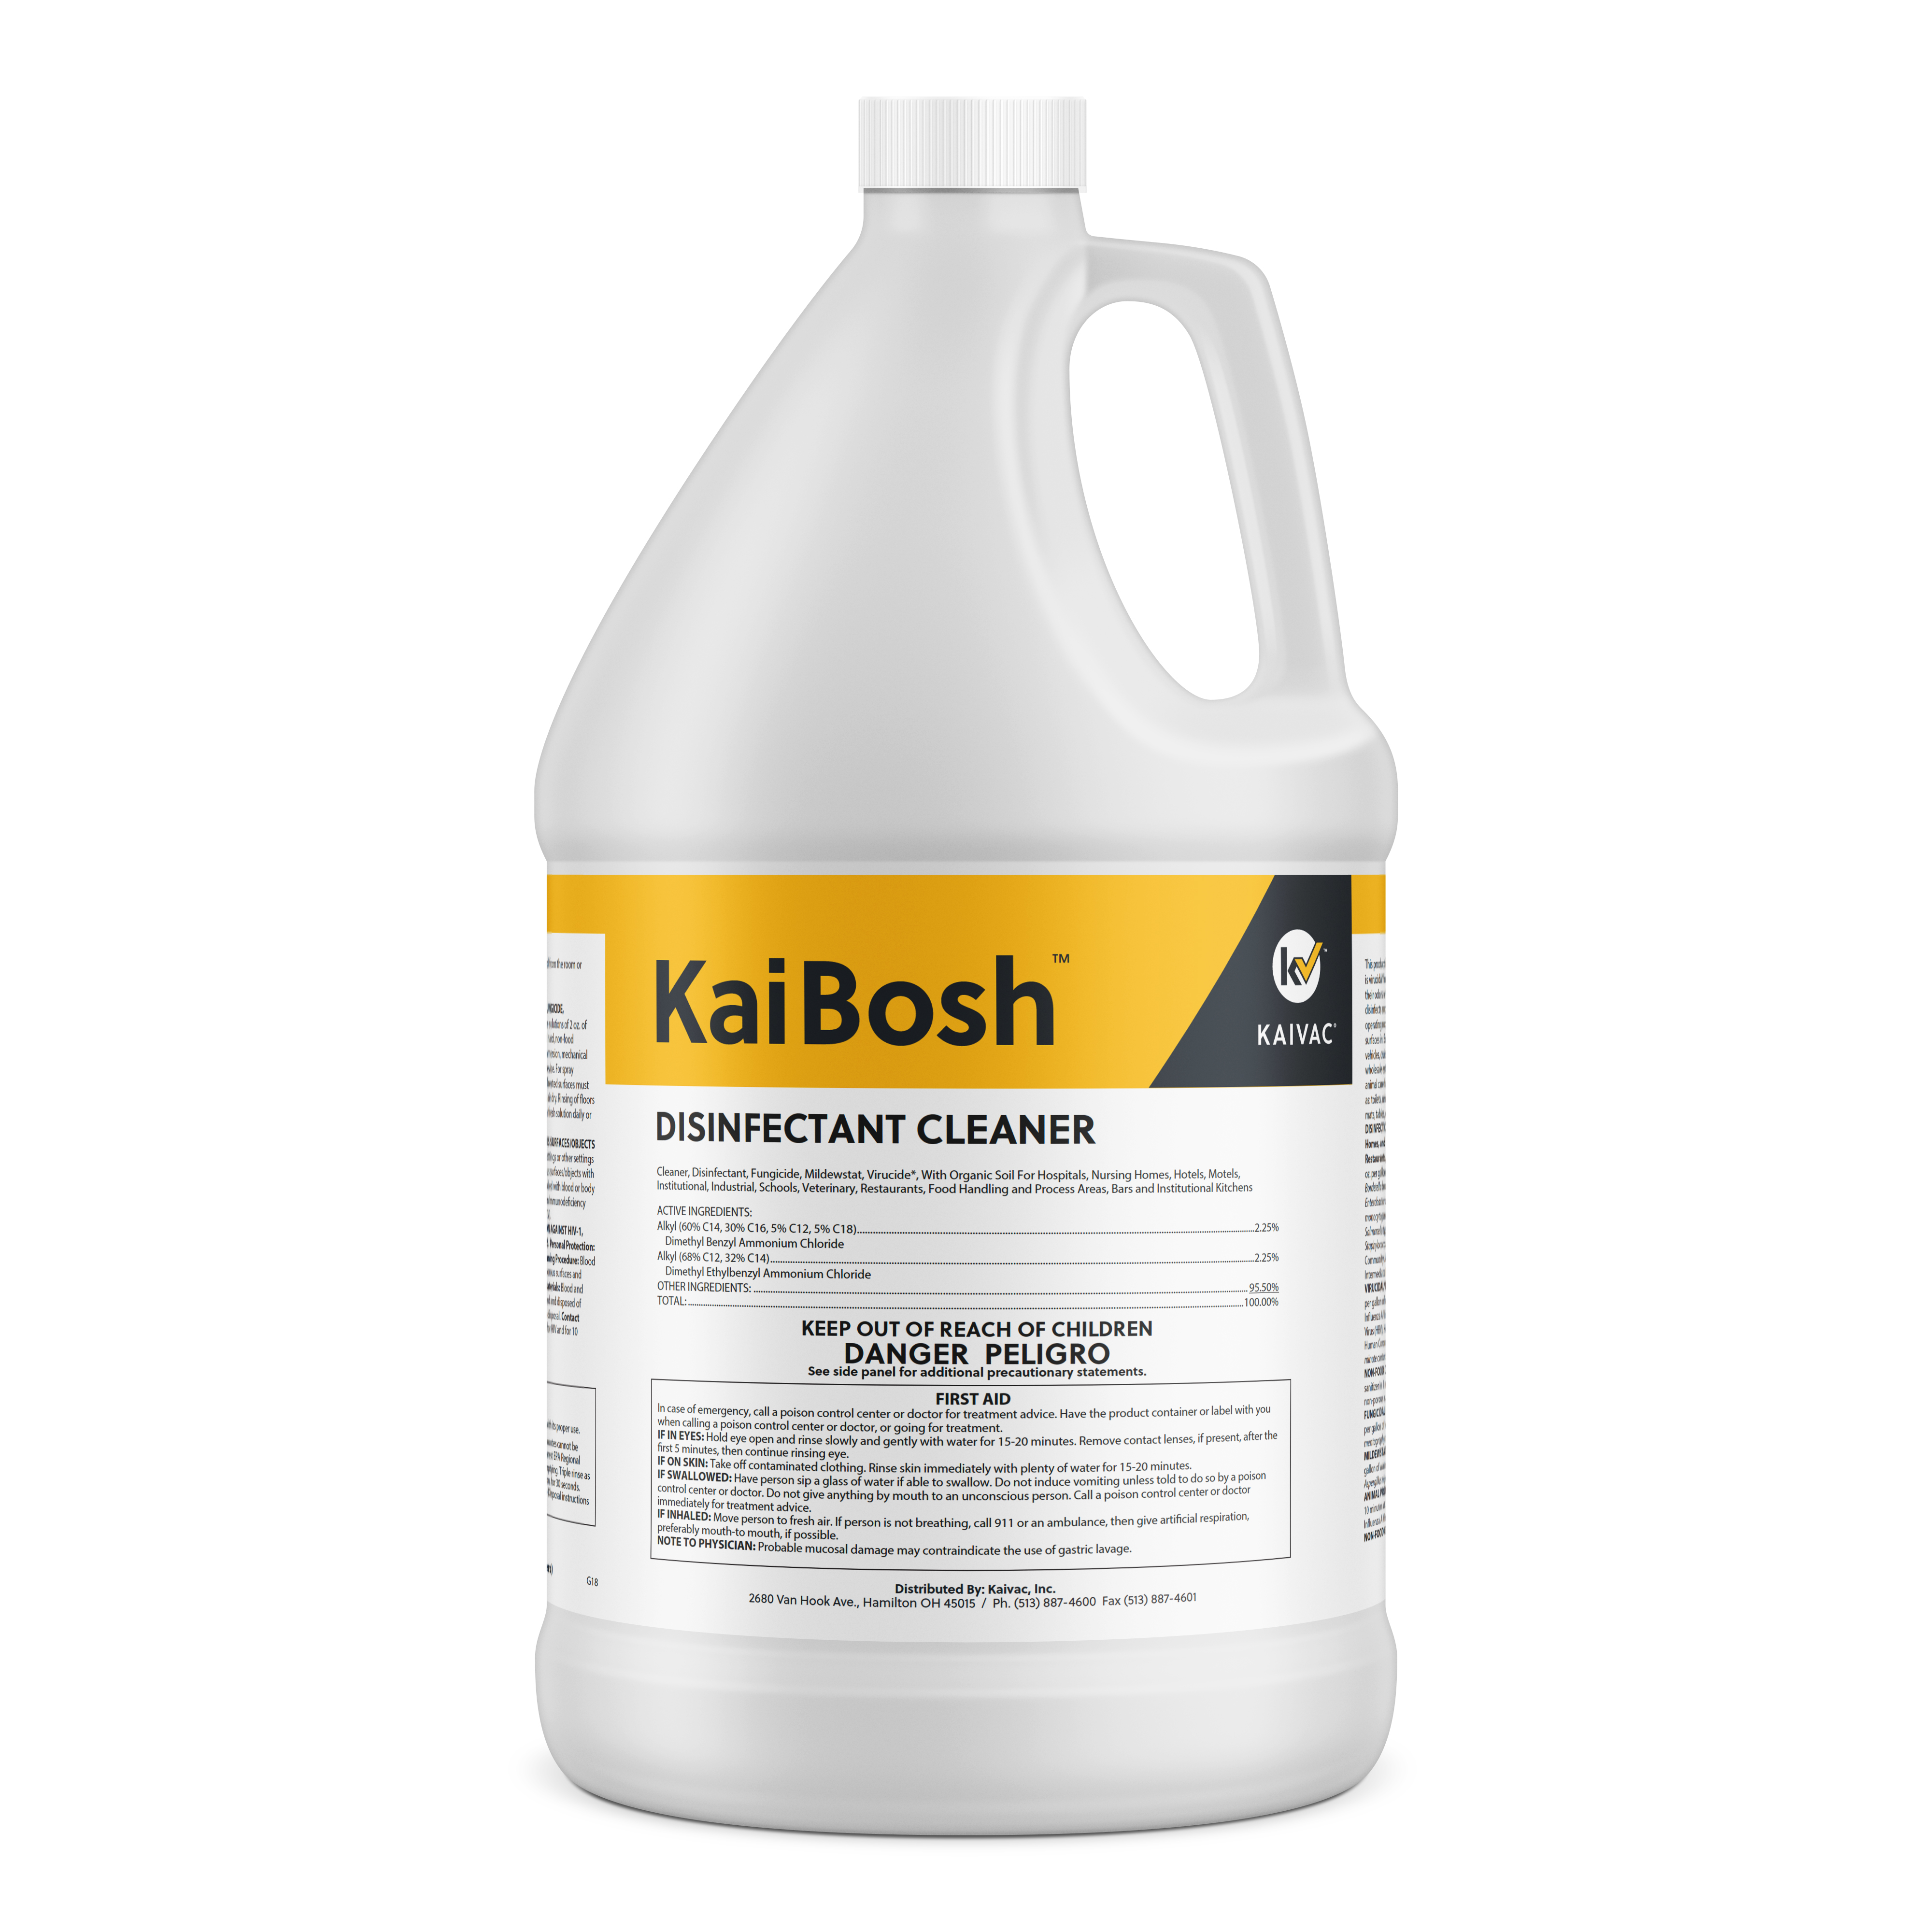 KaiBosh Disinfectant Cleaner